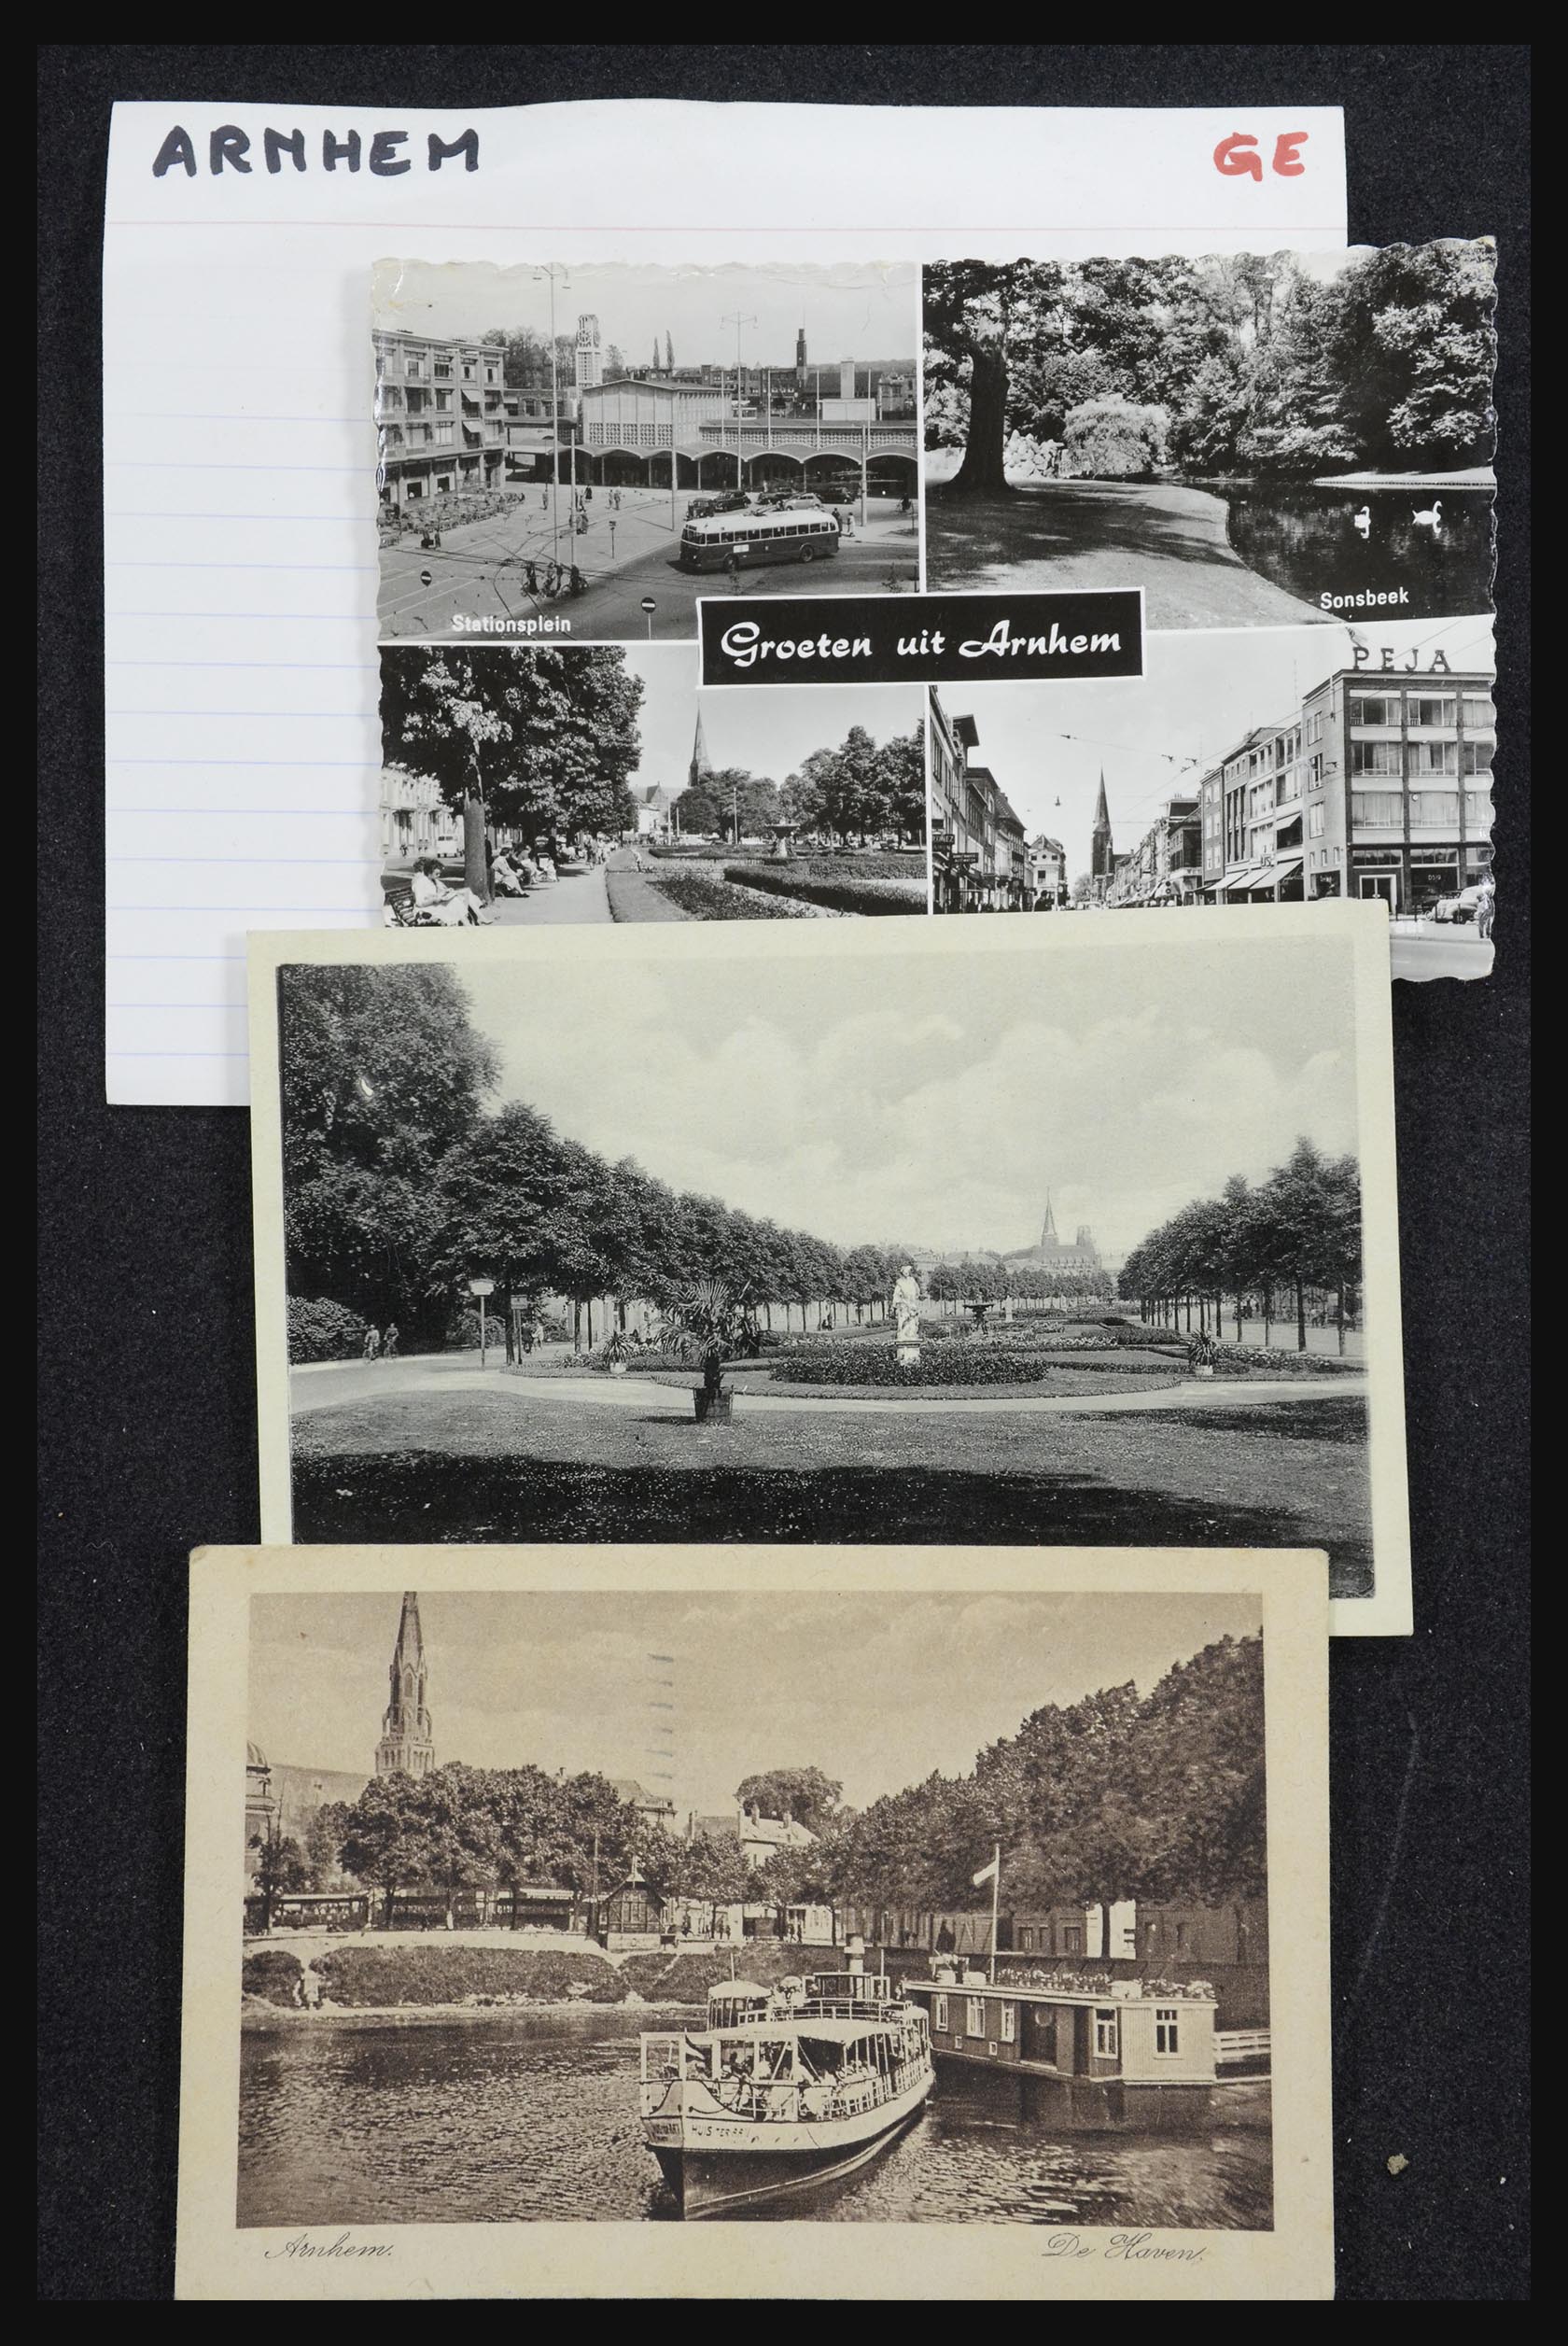 32408 082 - 32408 Netherlands picture postcards.